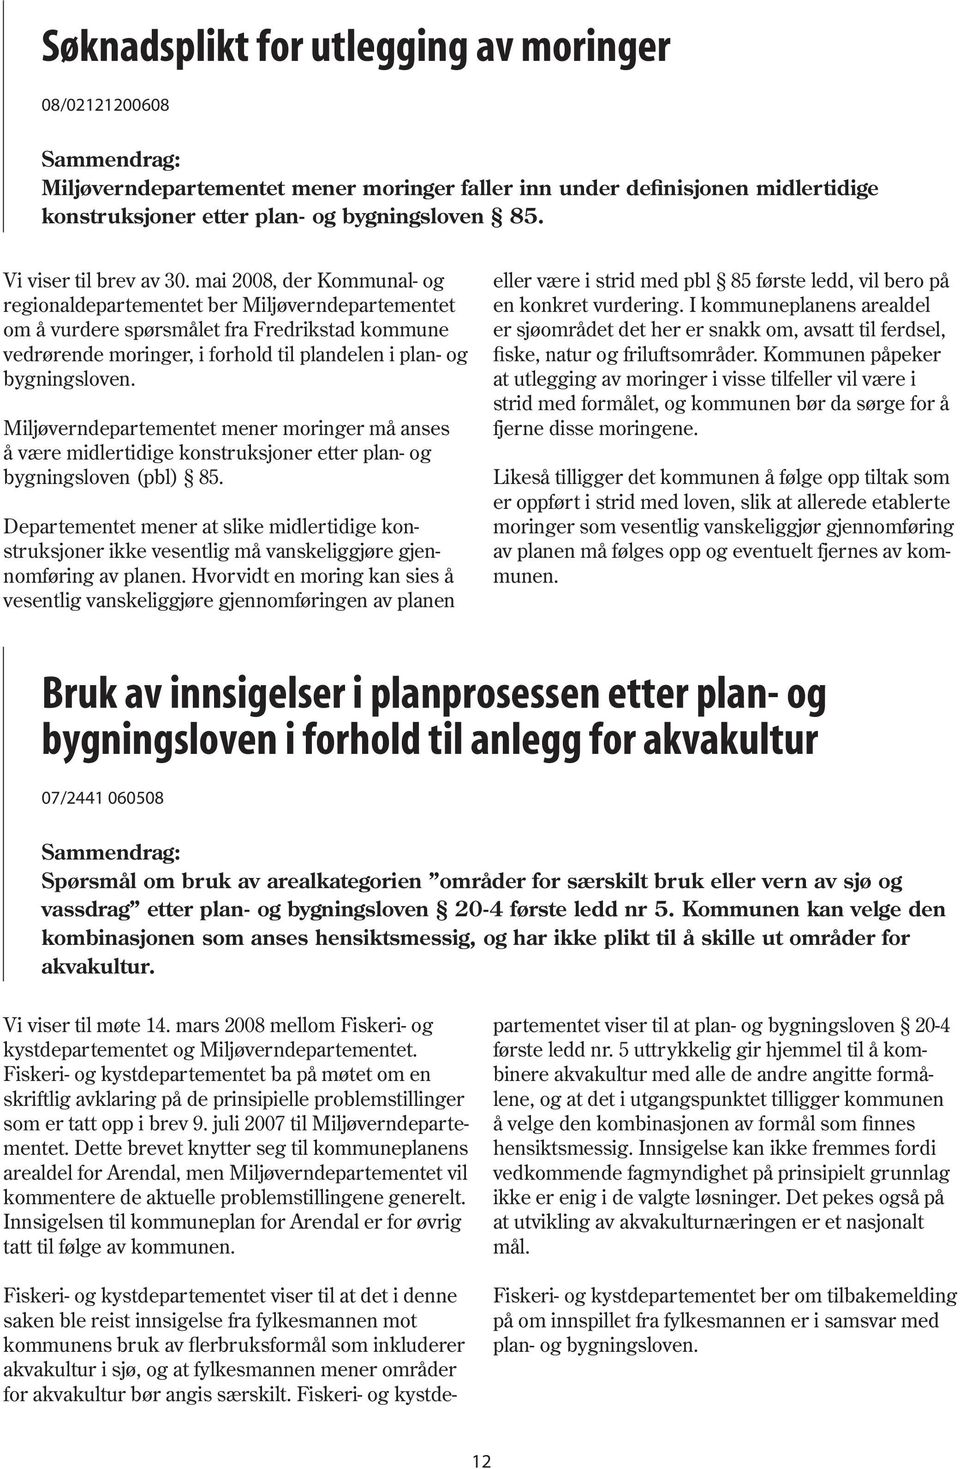 mai 2008, der Kommunal- og regionaldepartementet ber Miljøverndepartementet om å vurdere spørsmålet fra Fredrikstad kommune vedrørende moringer, i forhold til plandelen i plan- og bygningsloven.